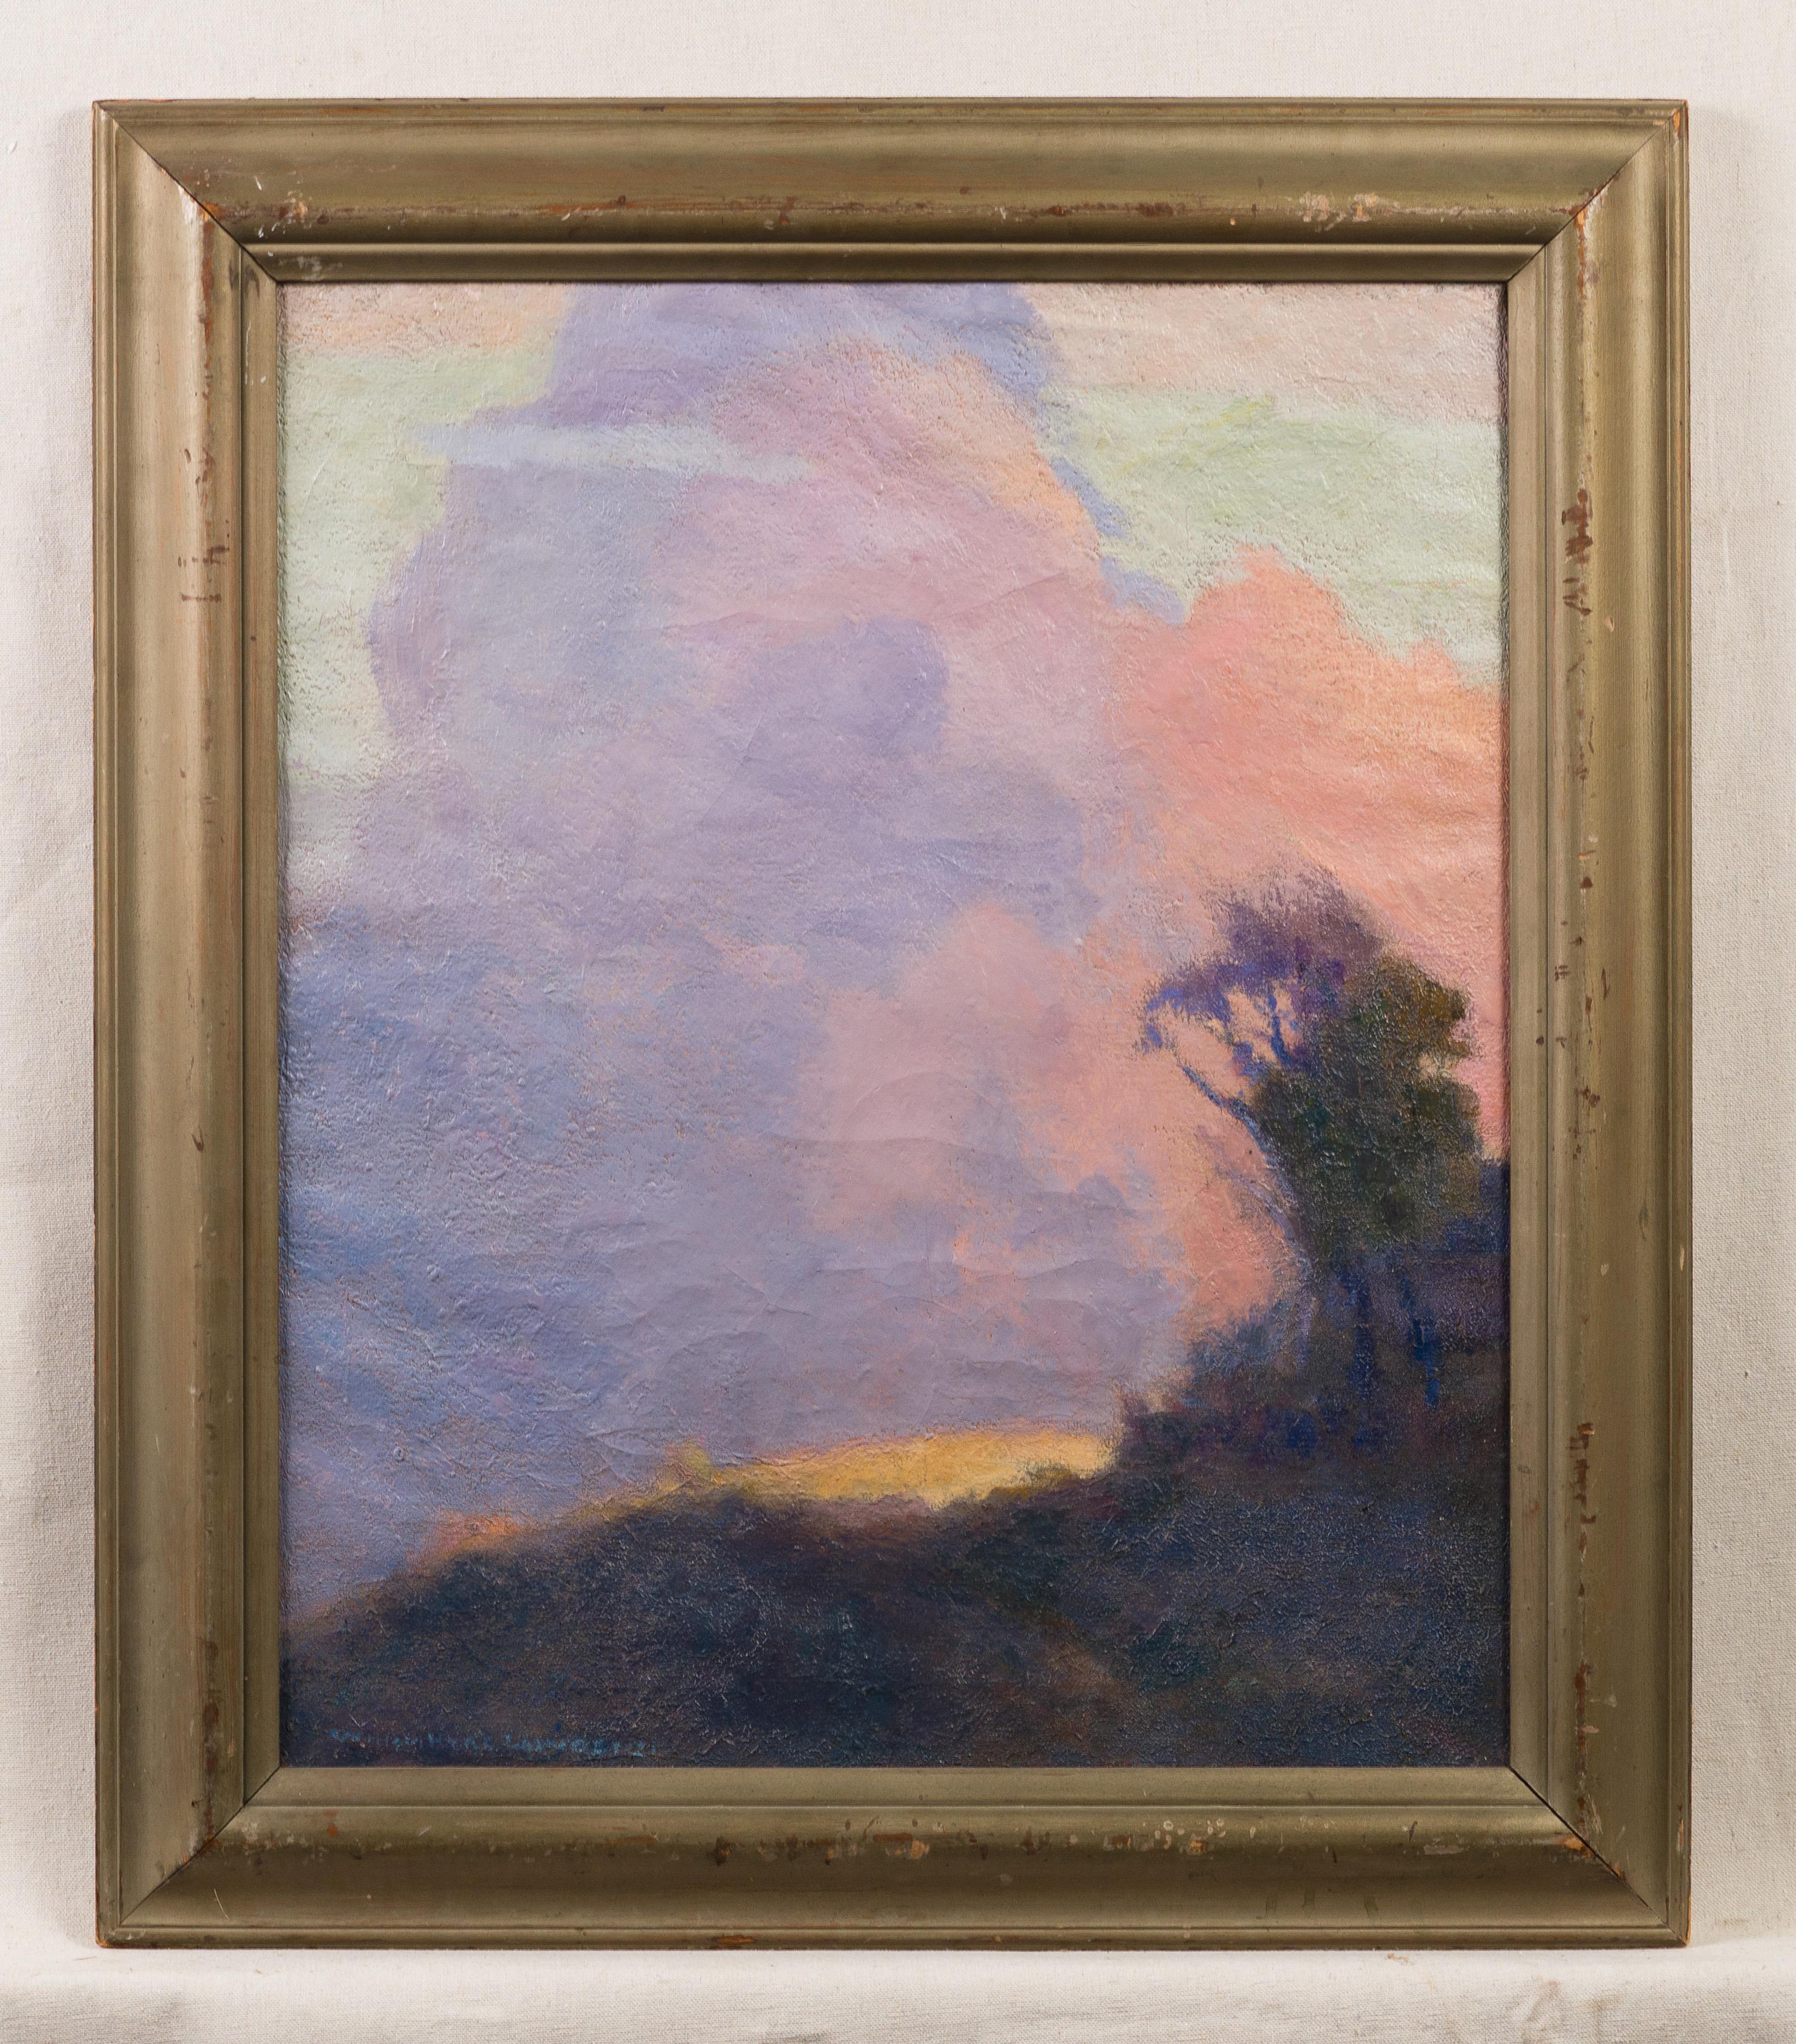 Antique American impressionist landscape oil painting.  Oil on canvas.  Framed.  Signed.  Artist bio; Lawrence, William Hurd   (1866-1938)
 
